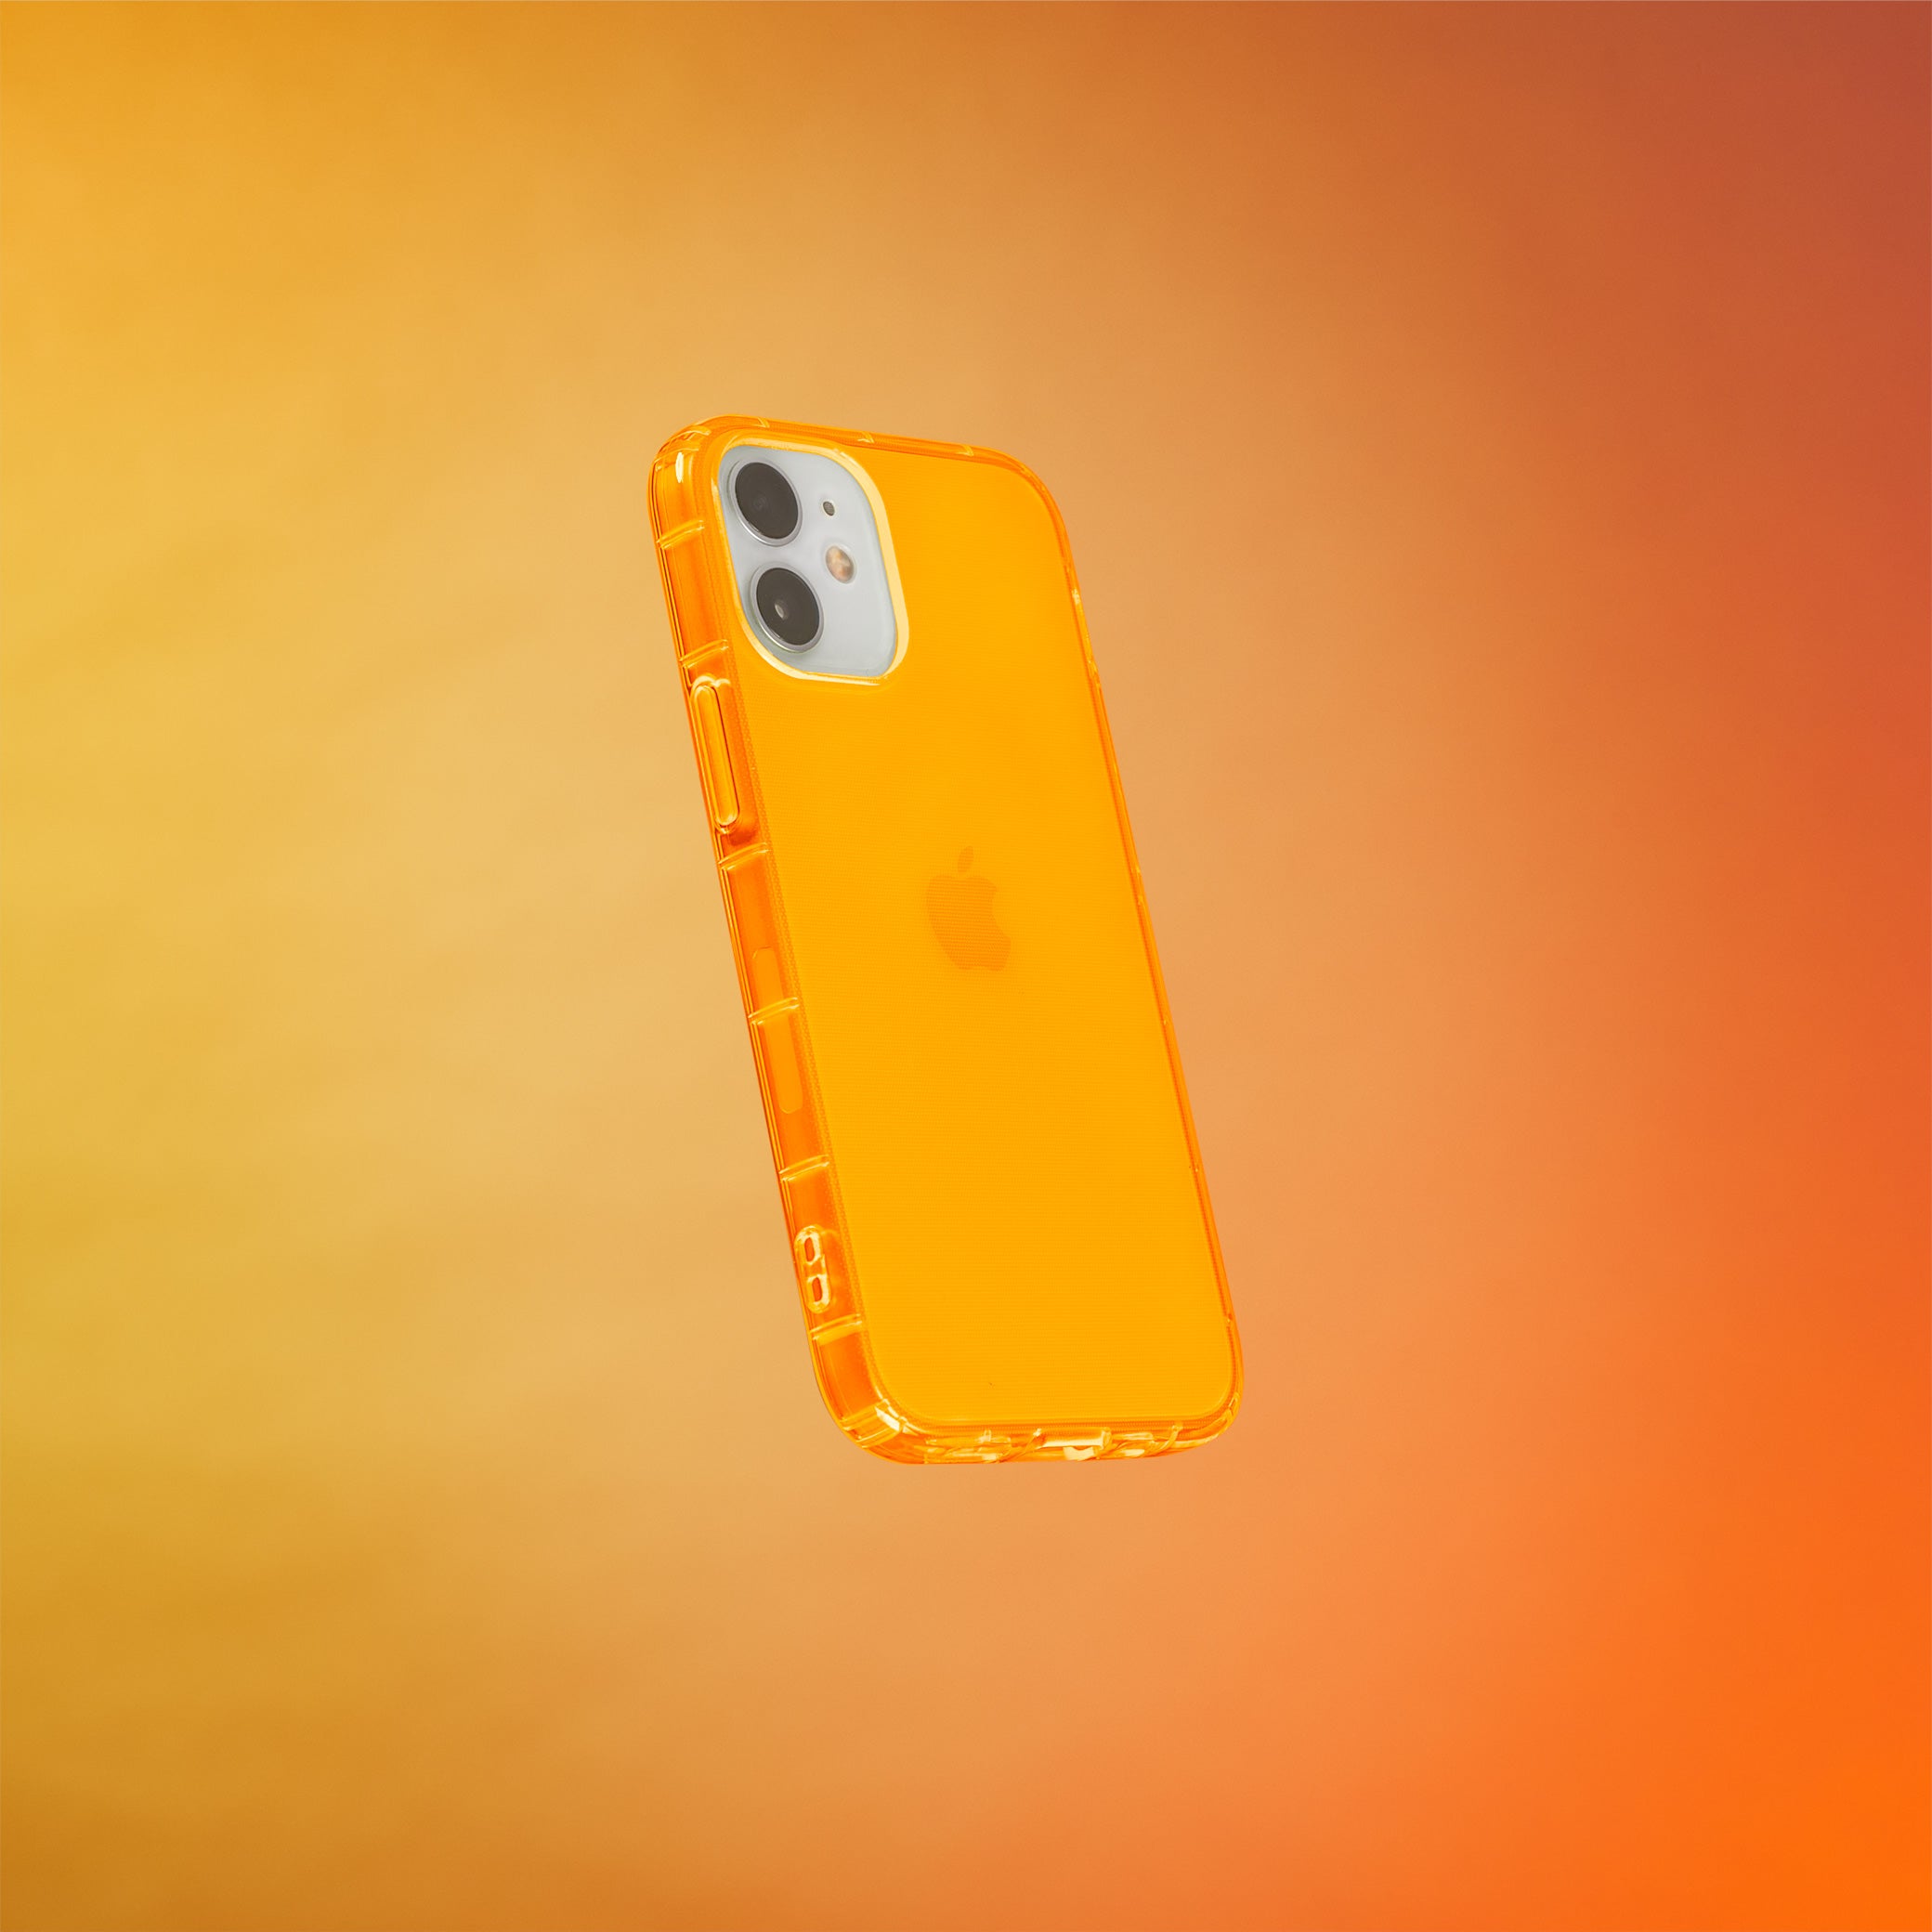 Highlighter Case for iPhone 12 Mini - Intense Bright Orange